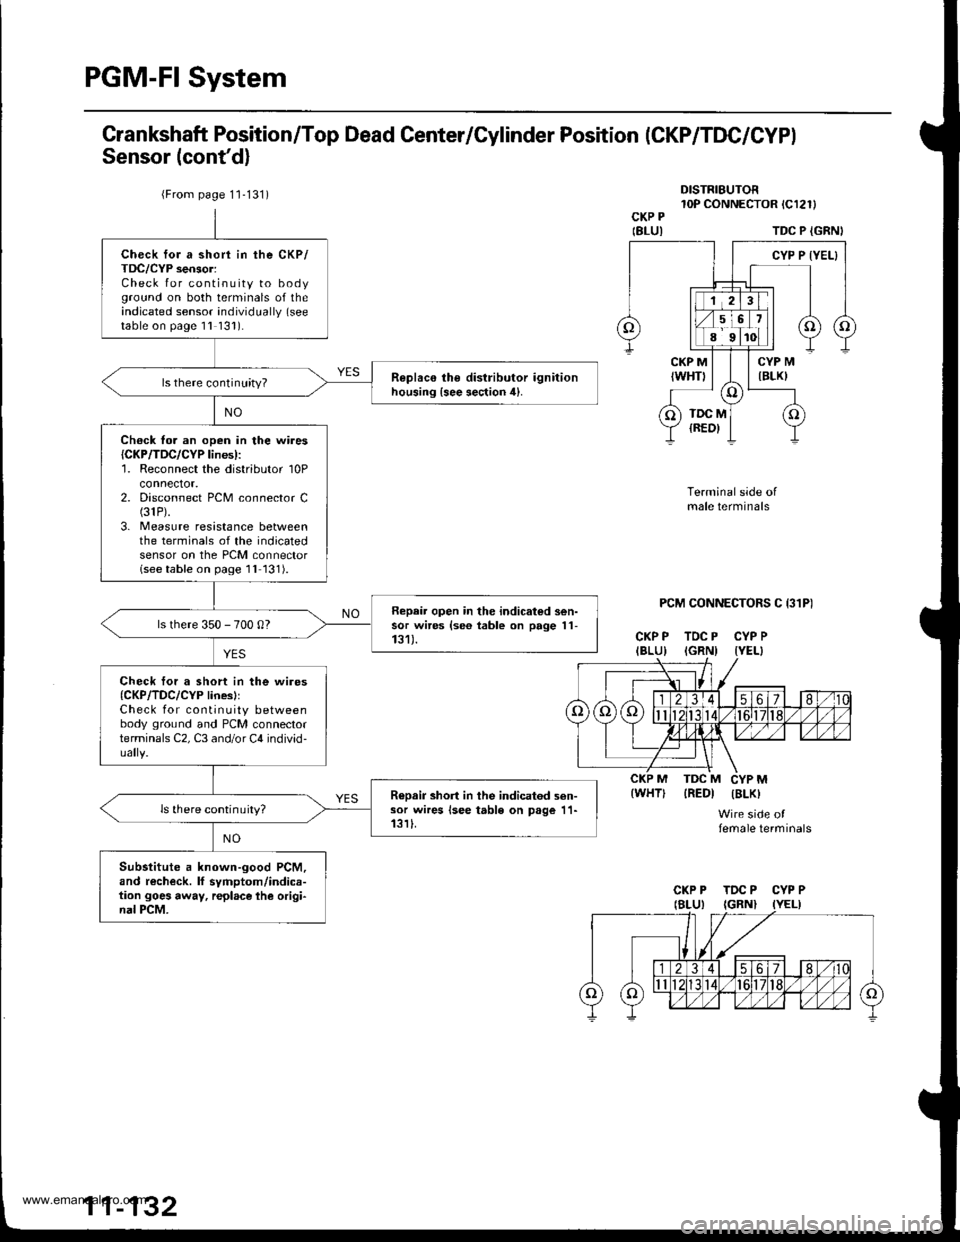 HONDA CR-V 1998 RD1-RD3 / 1.G Repair Manual 
PGM-FI System
Grankshaft Position/Top Dead Center/Cylinder Position (CKP/TDC/CYPI
Sensor (contd)
DISTRIBUTOR10P CONNECTOR tCl2l)CKP P
IBLUITDC P {GRNI
PCM CONNECTORS C I31P)
CKP P TDC P CYP PIBLU) I